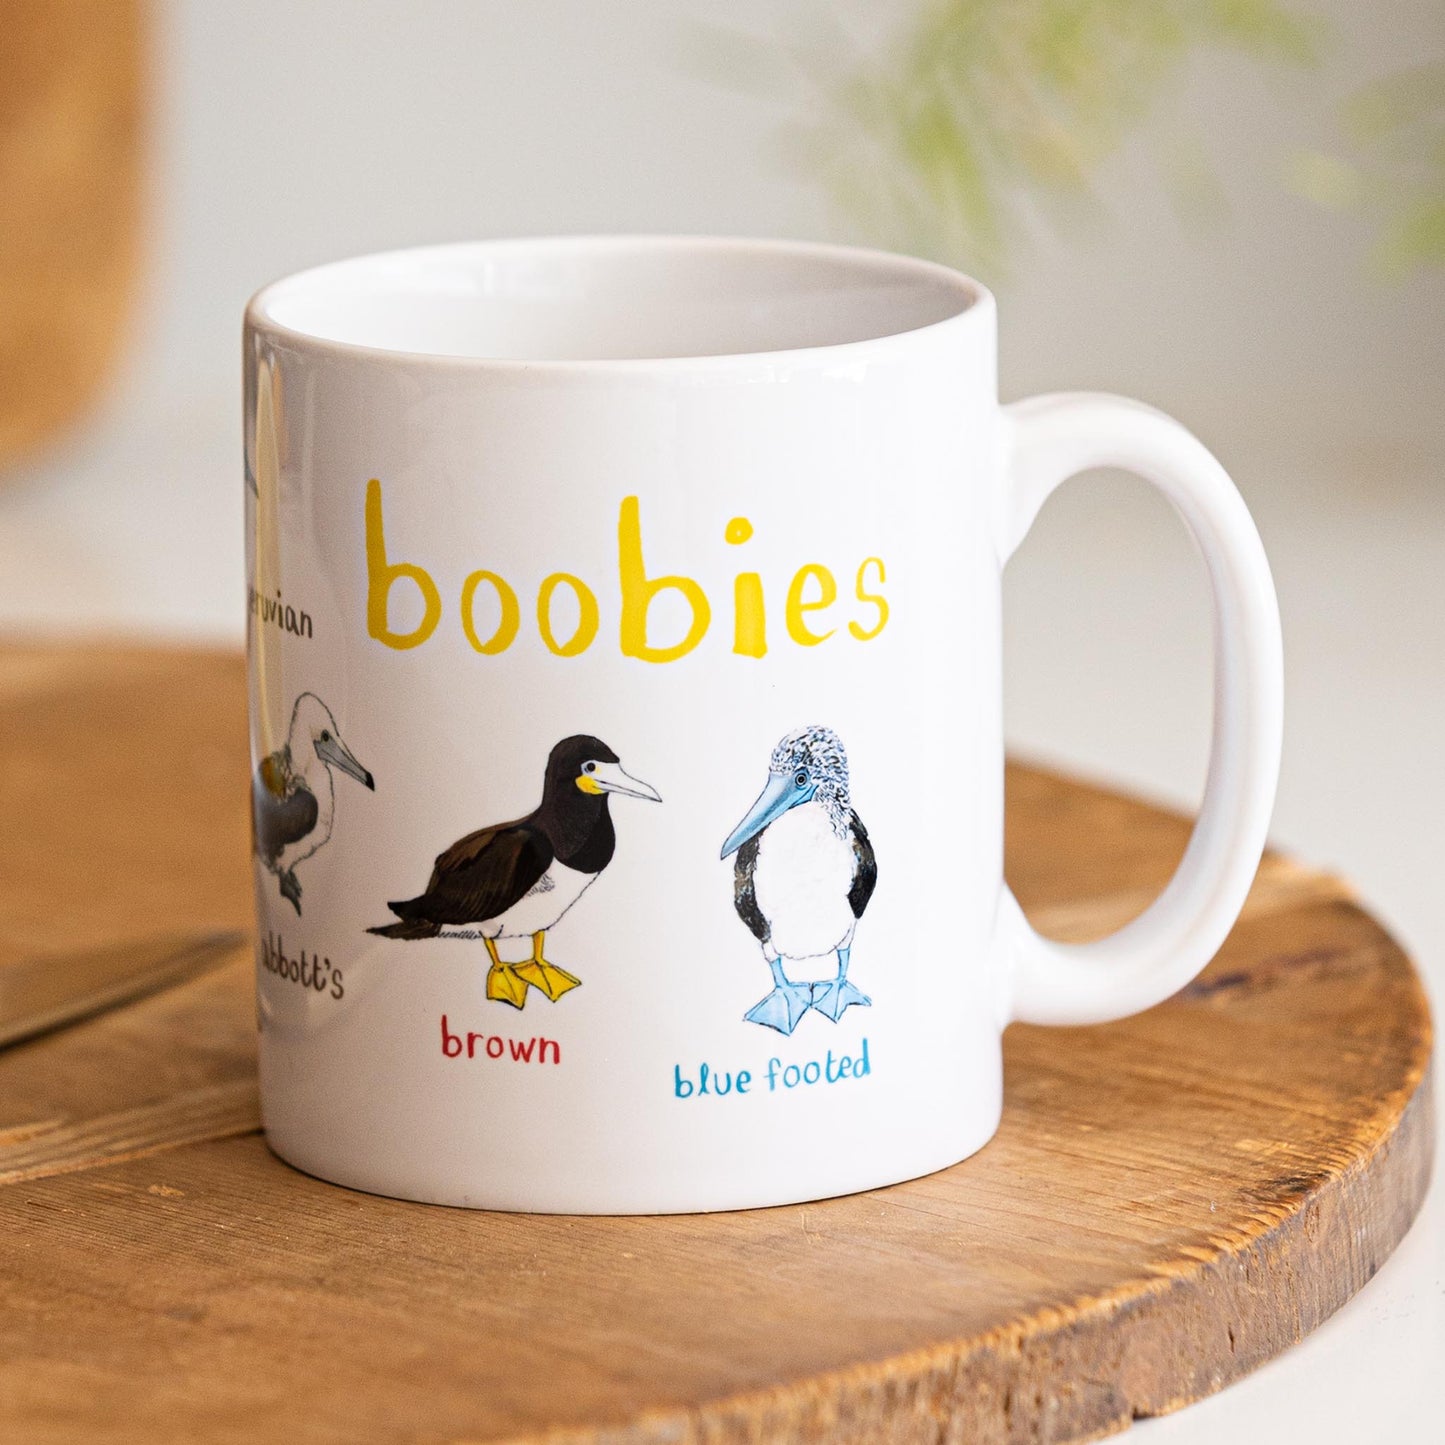 Pair of Tits and Boobies Bird Mugs